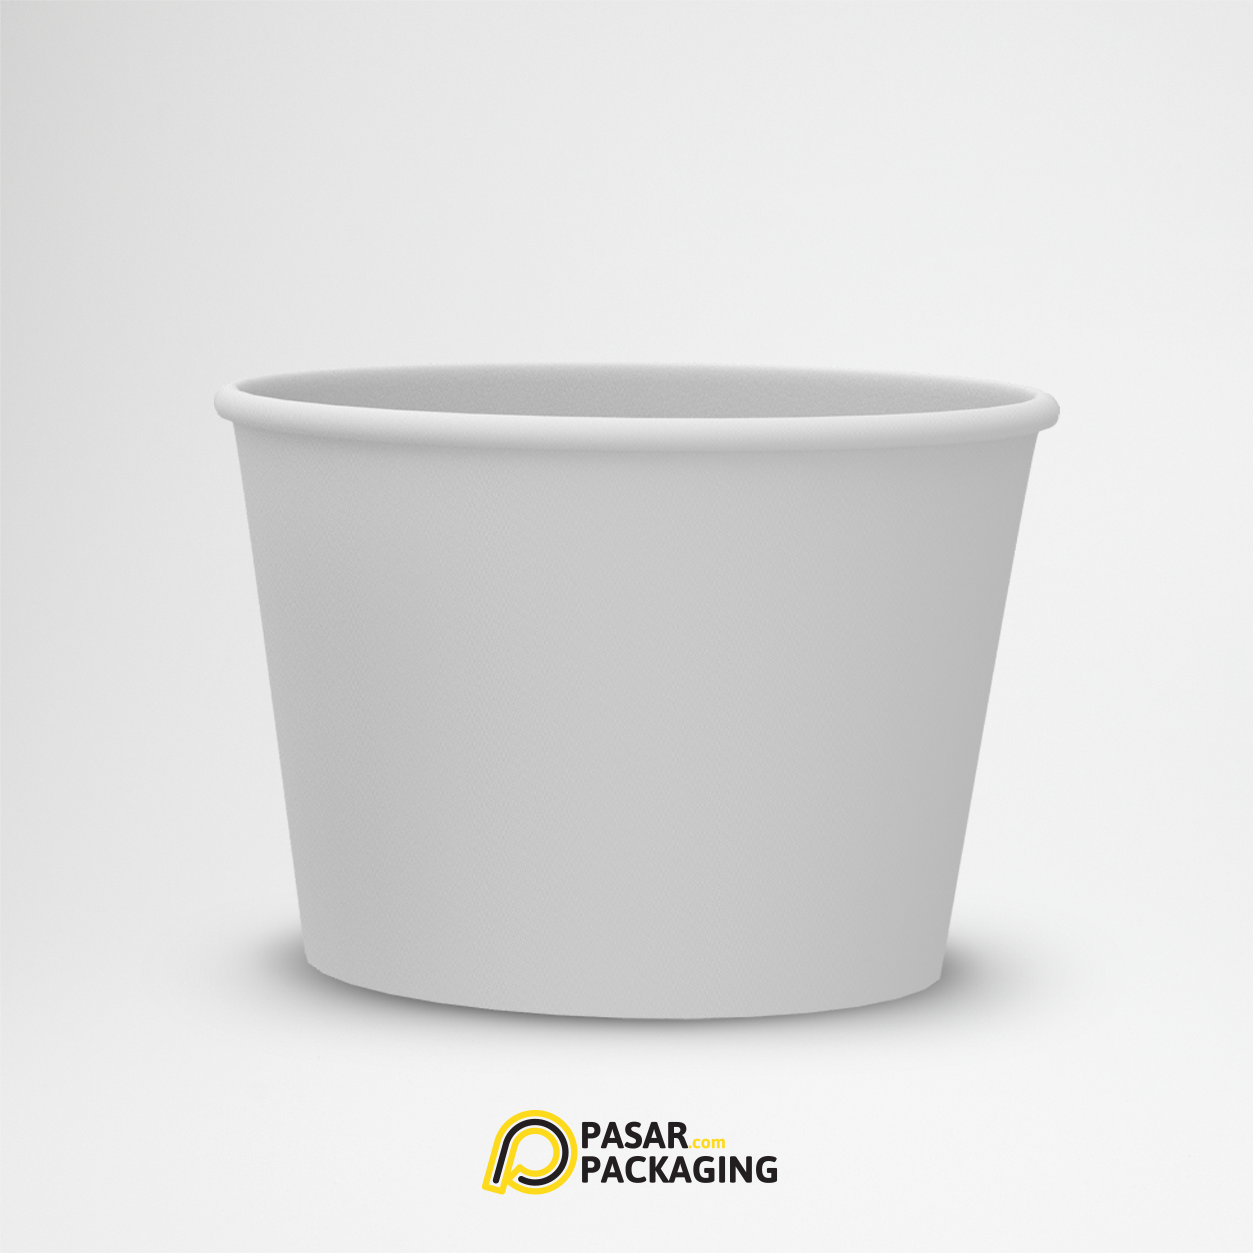 30oz Paper Bowl - Pasar Packaging